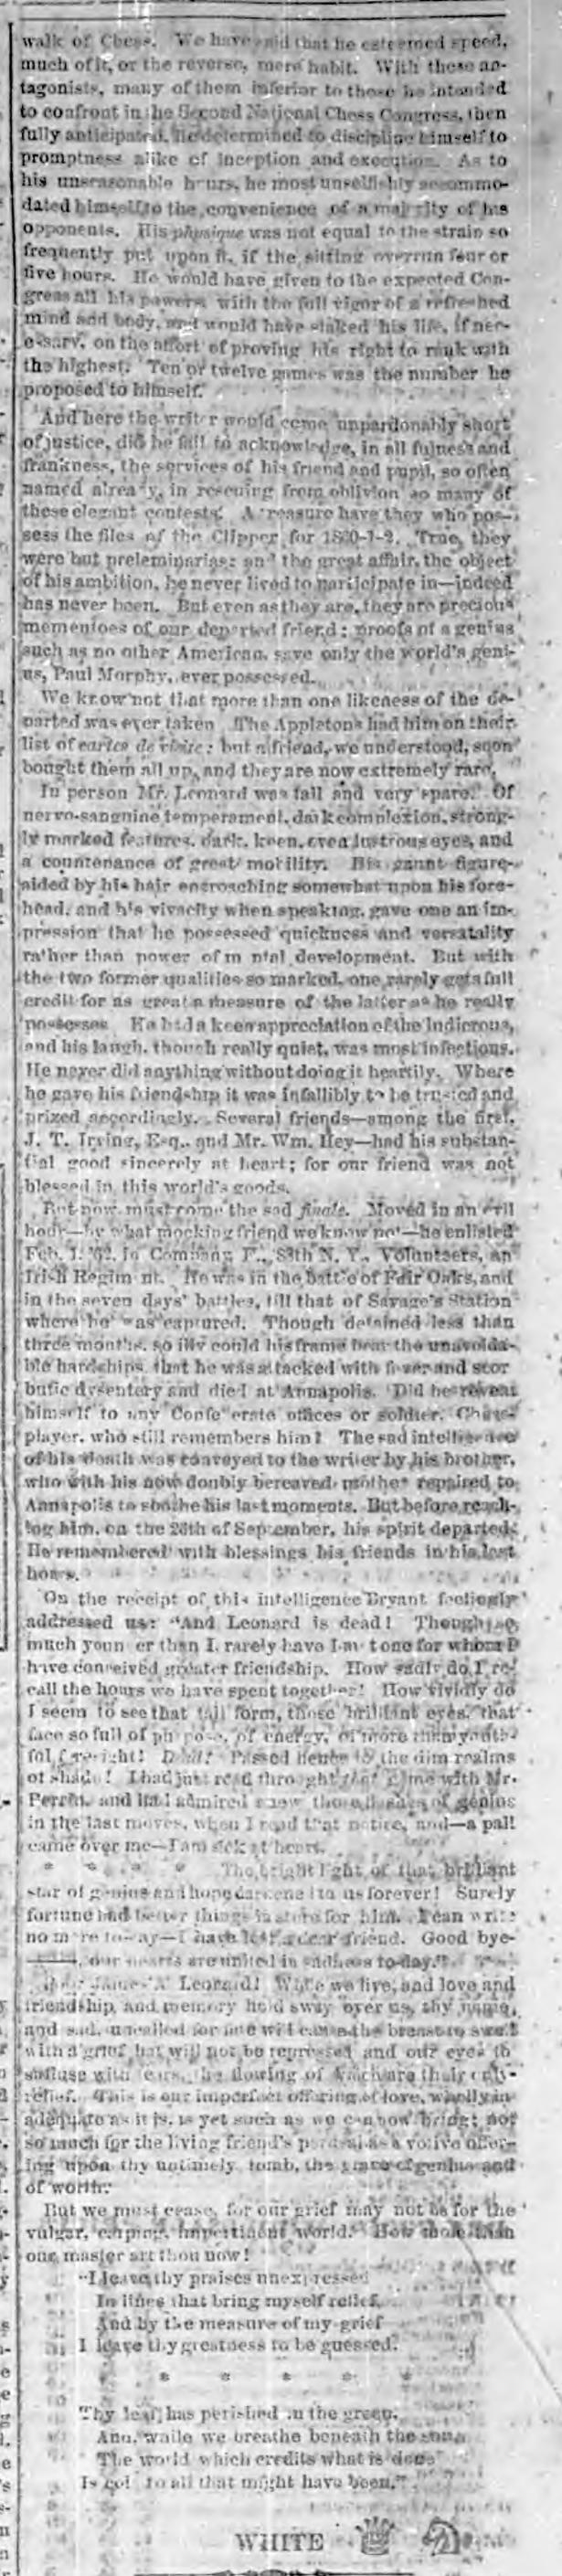 1867.03.01-02 Macon Georgia Weekly Telegraph.jpg